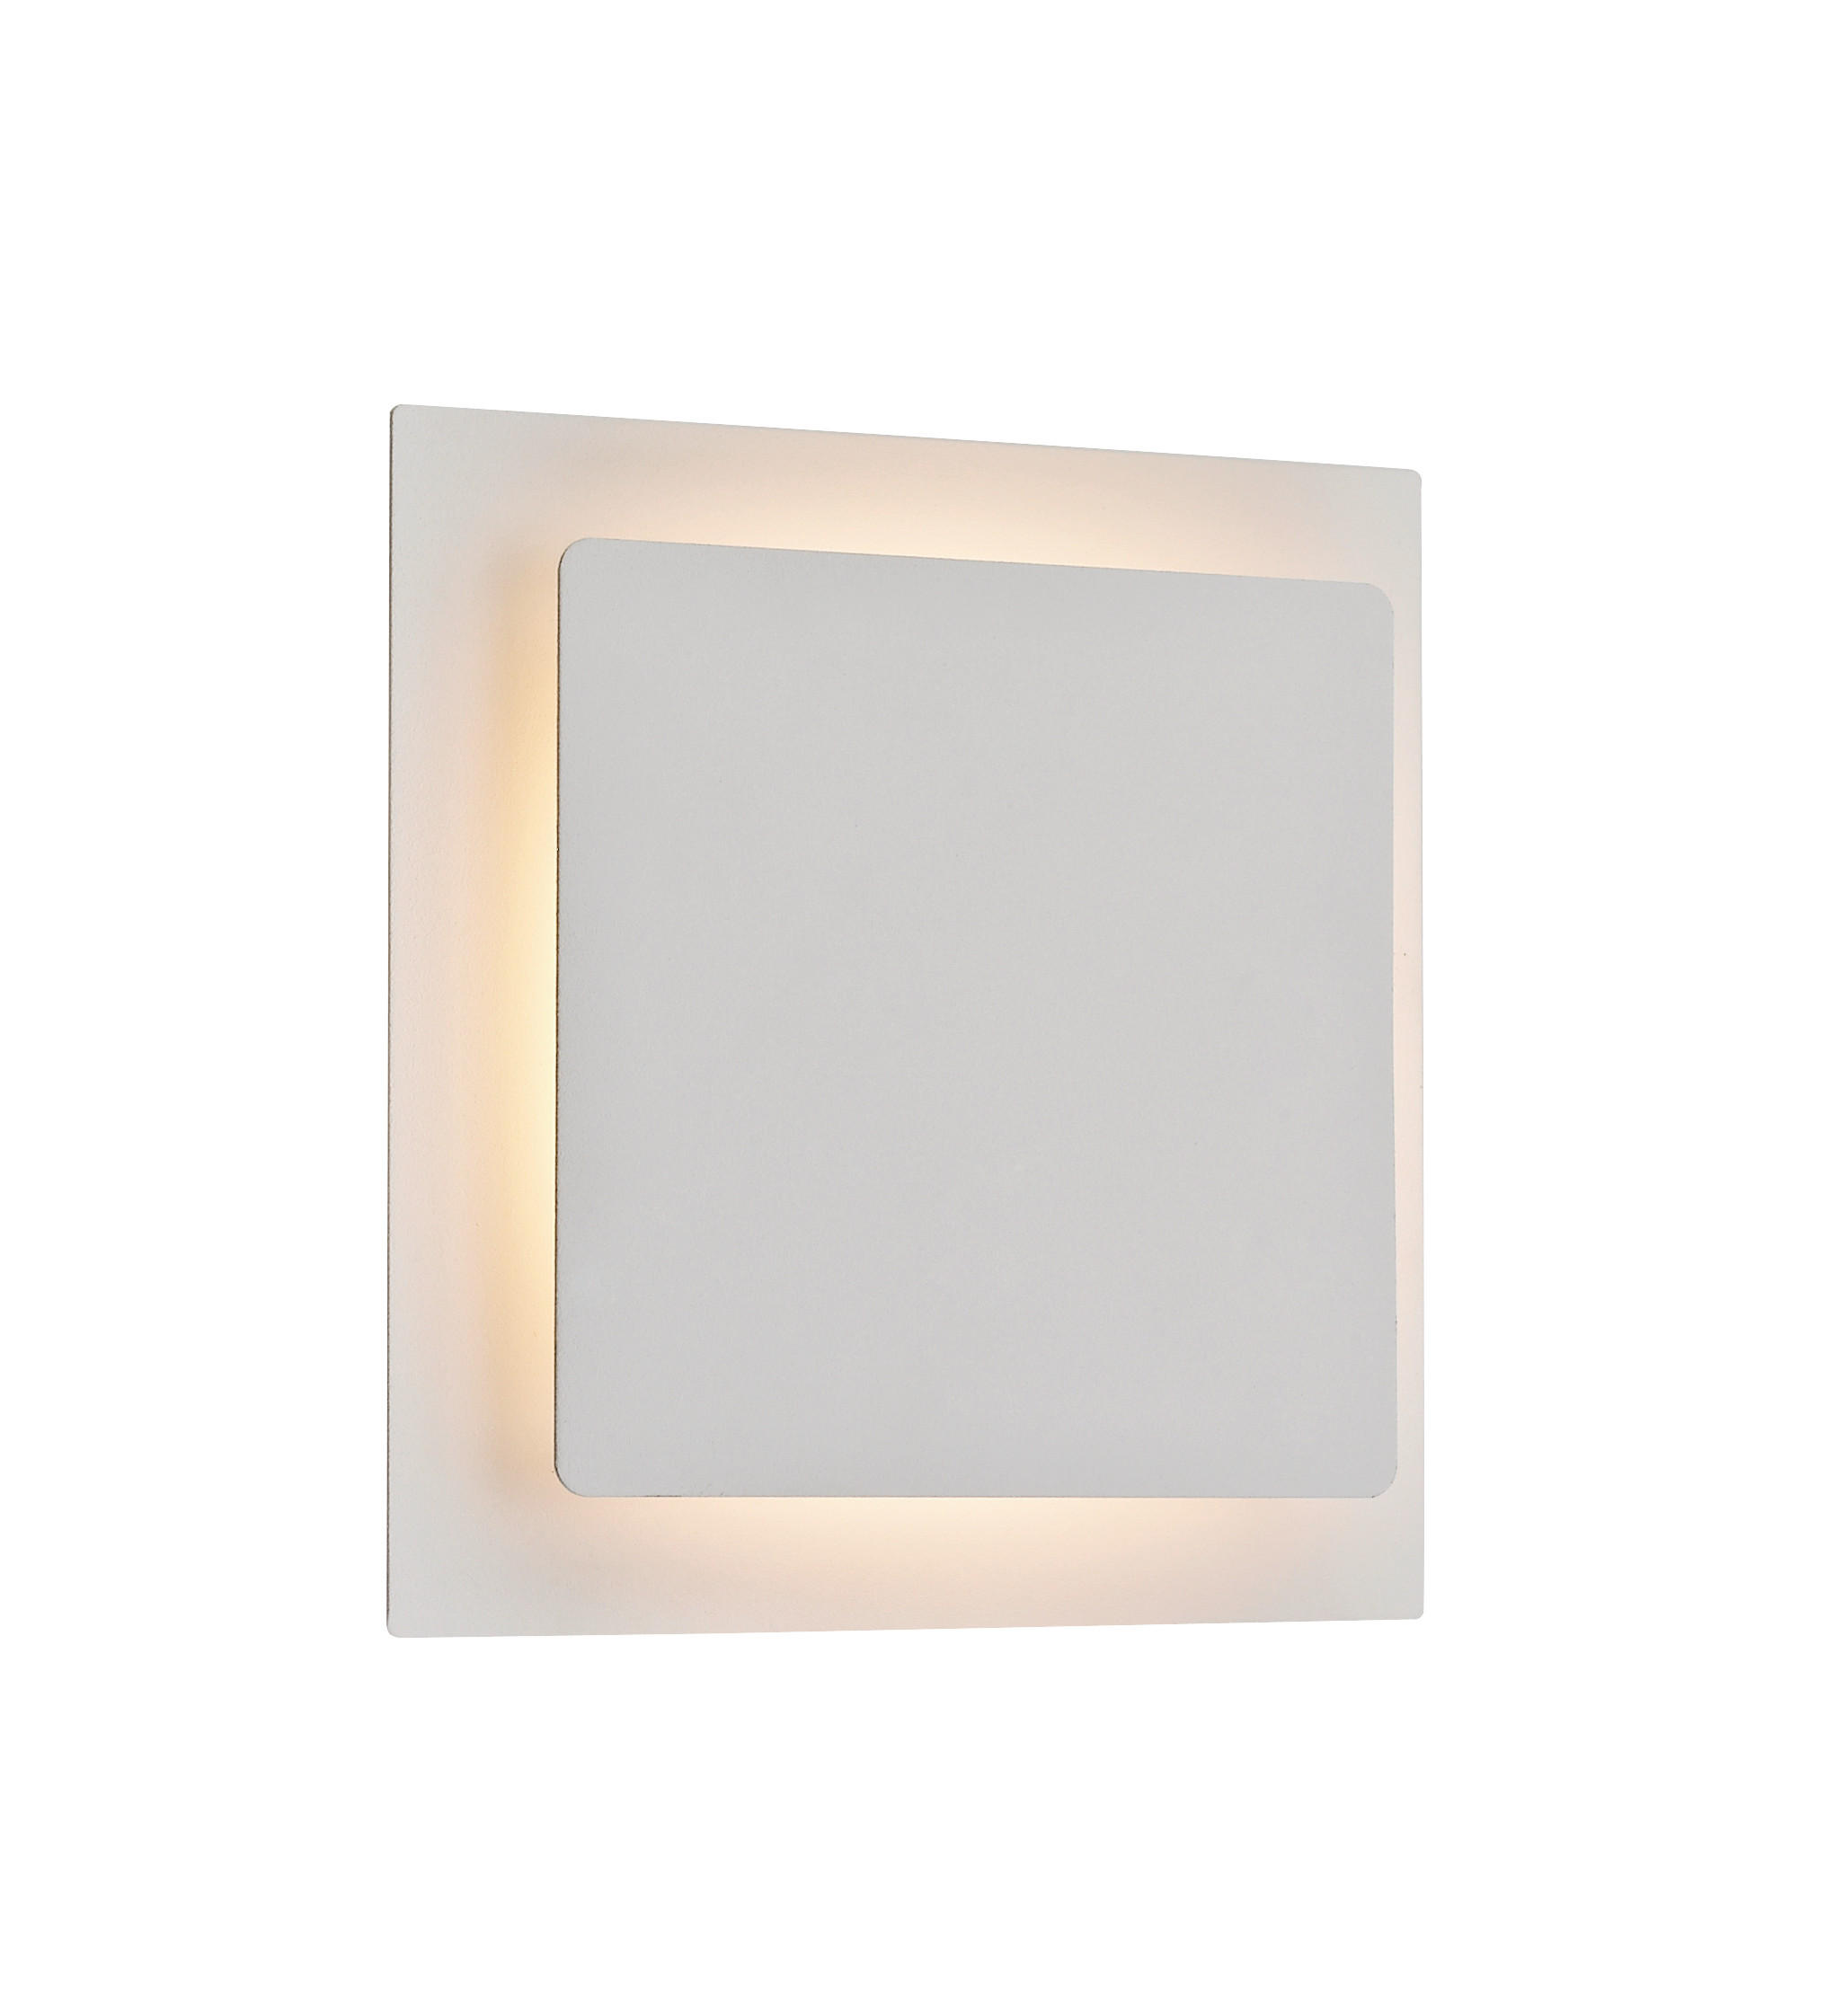 LED-WANDLEUCHTE 18/18/6,5 cm   - Weiß, Design, Kunststoff/Metall (18/18/6,5cm) - Globo